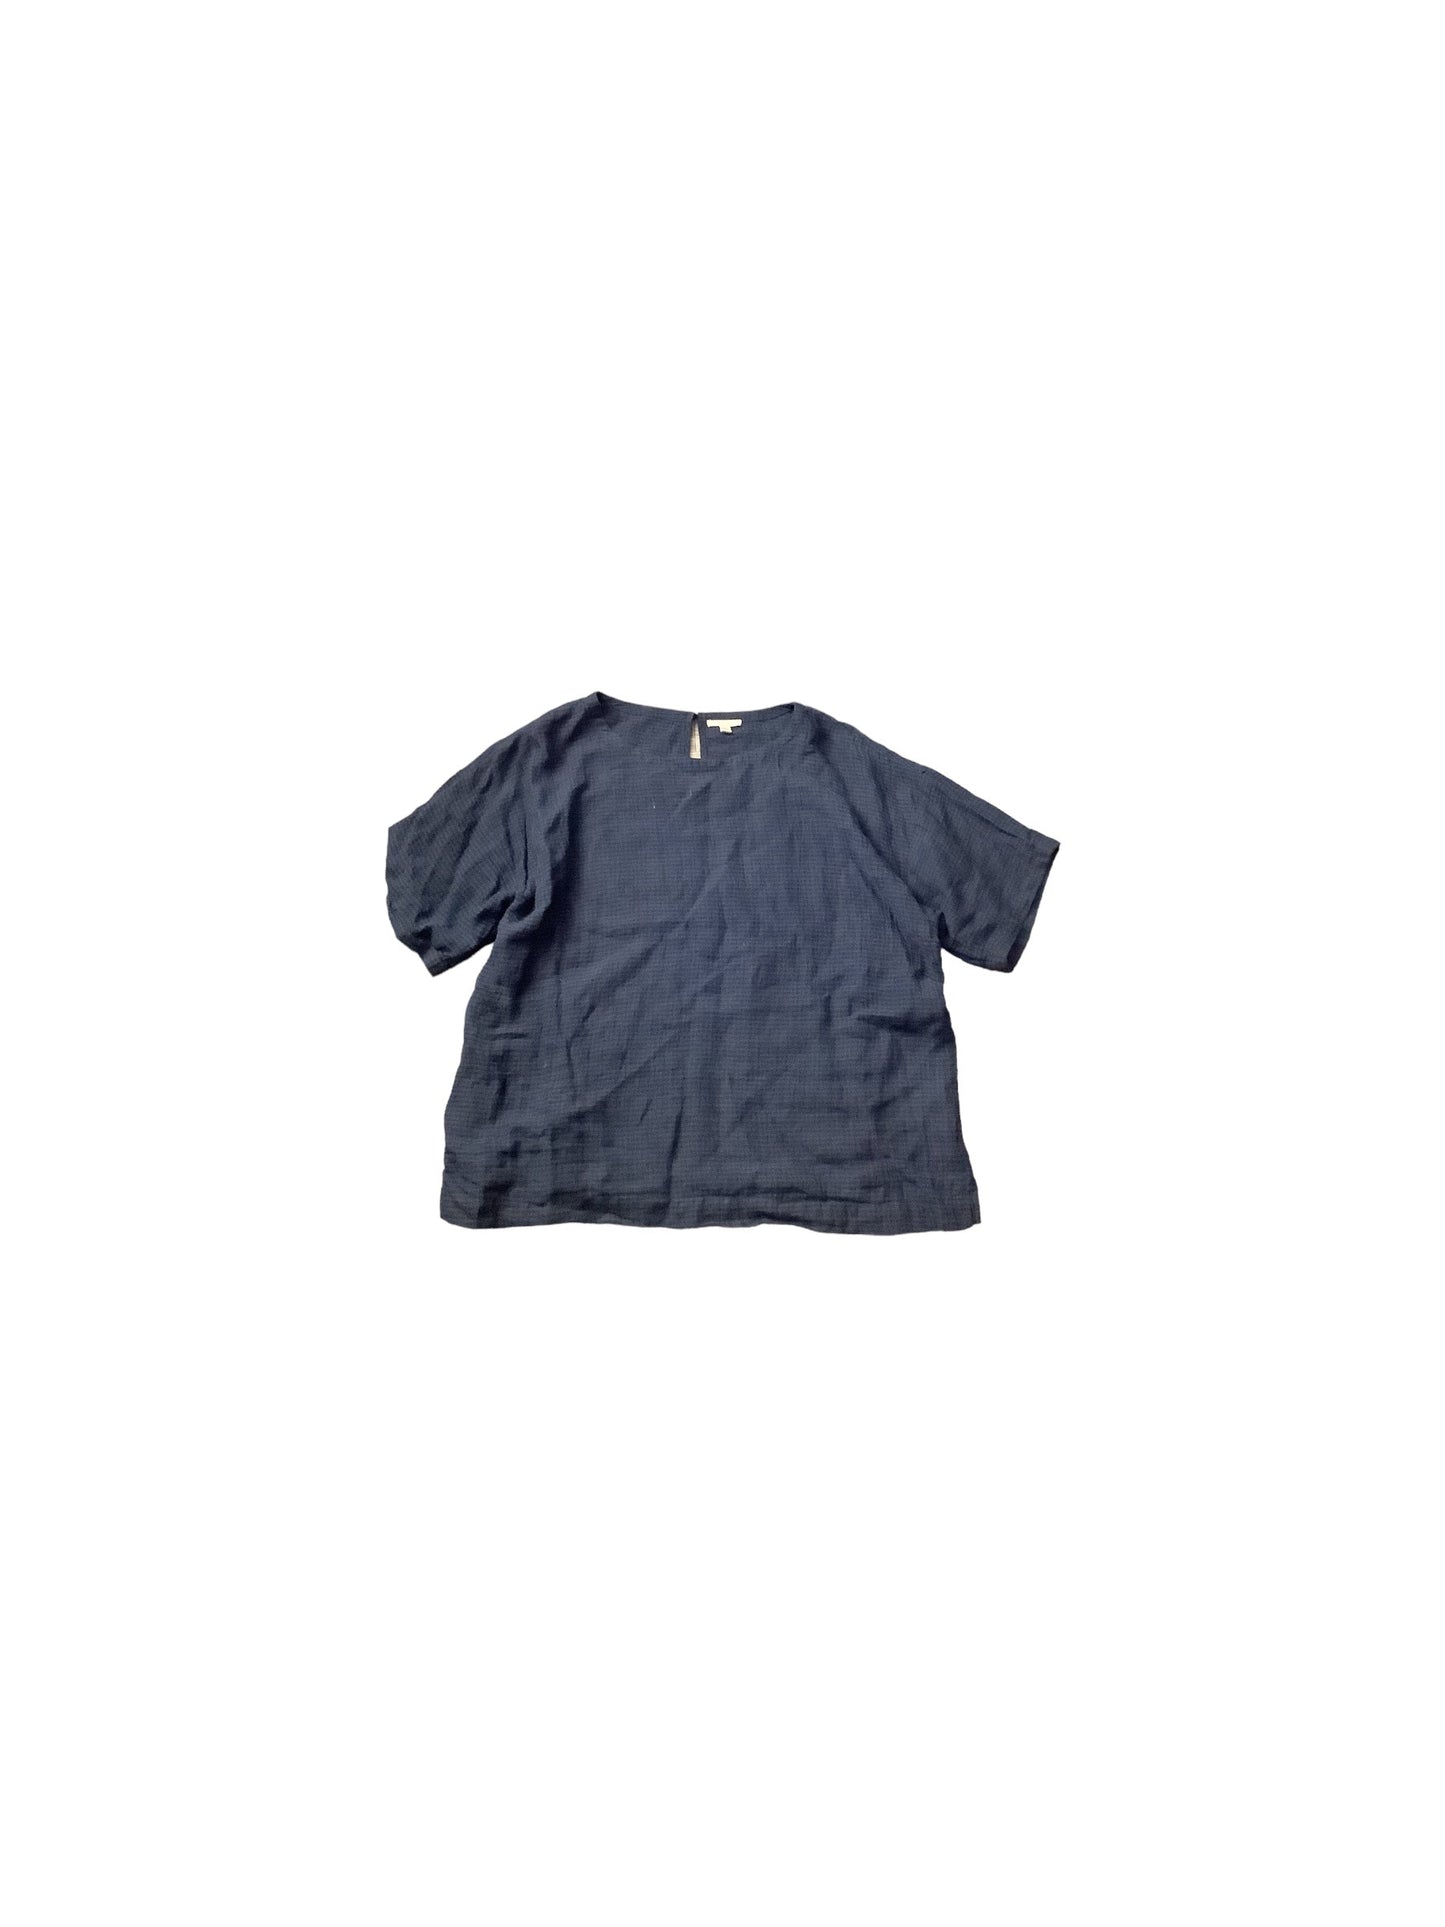 Blue Top Short Sleeve Basic Eileen Fisher, Size Xl